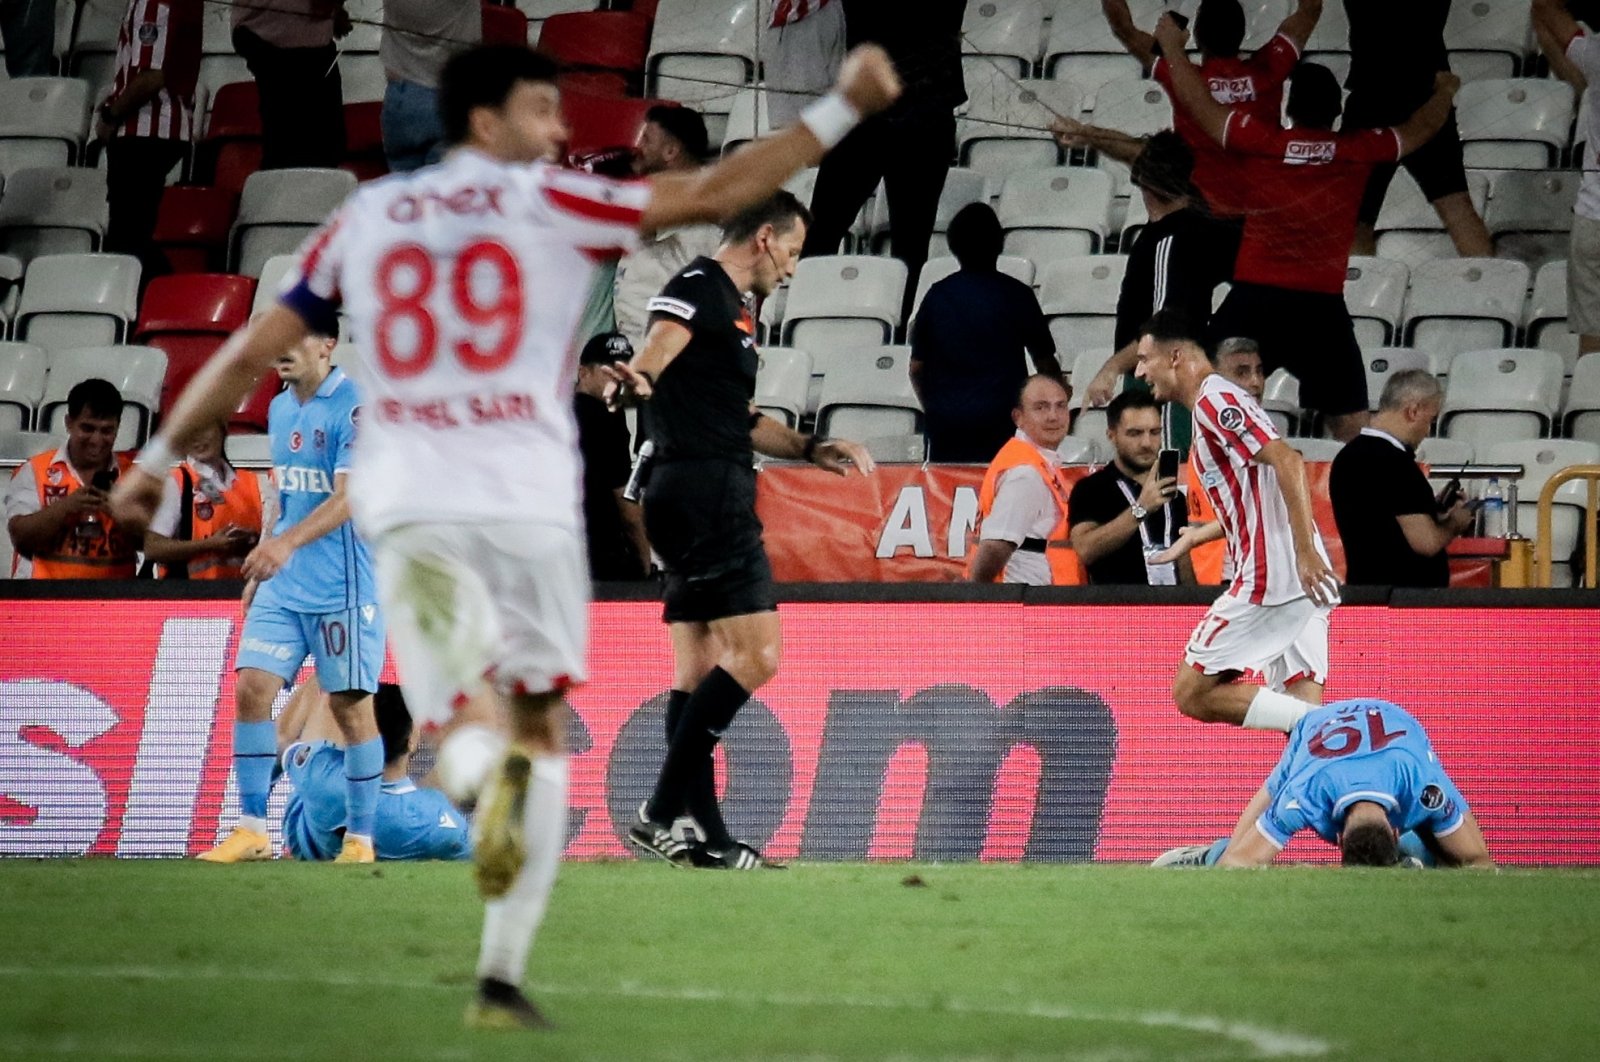 Antalyaspor memenangkan film thriller 7-gol melawan juara Trabzonspor